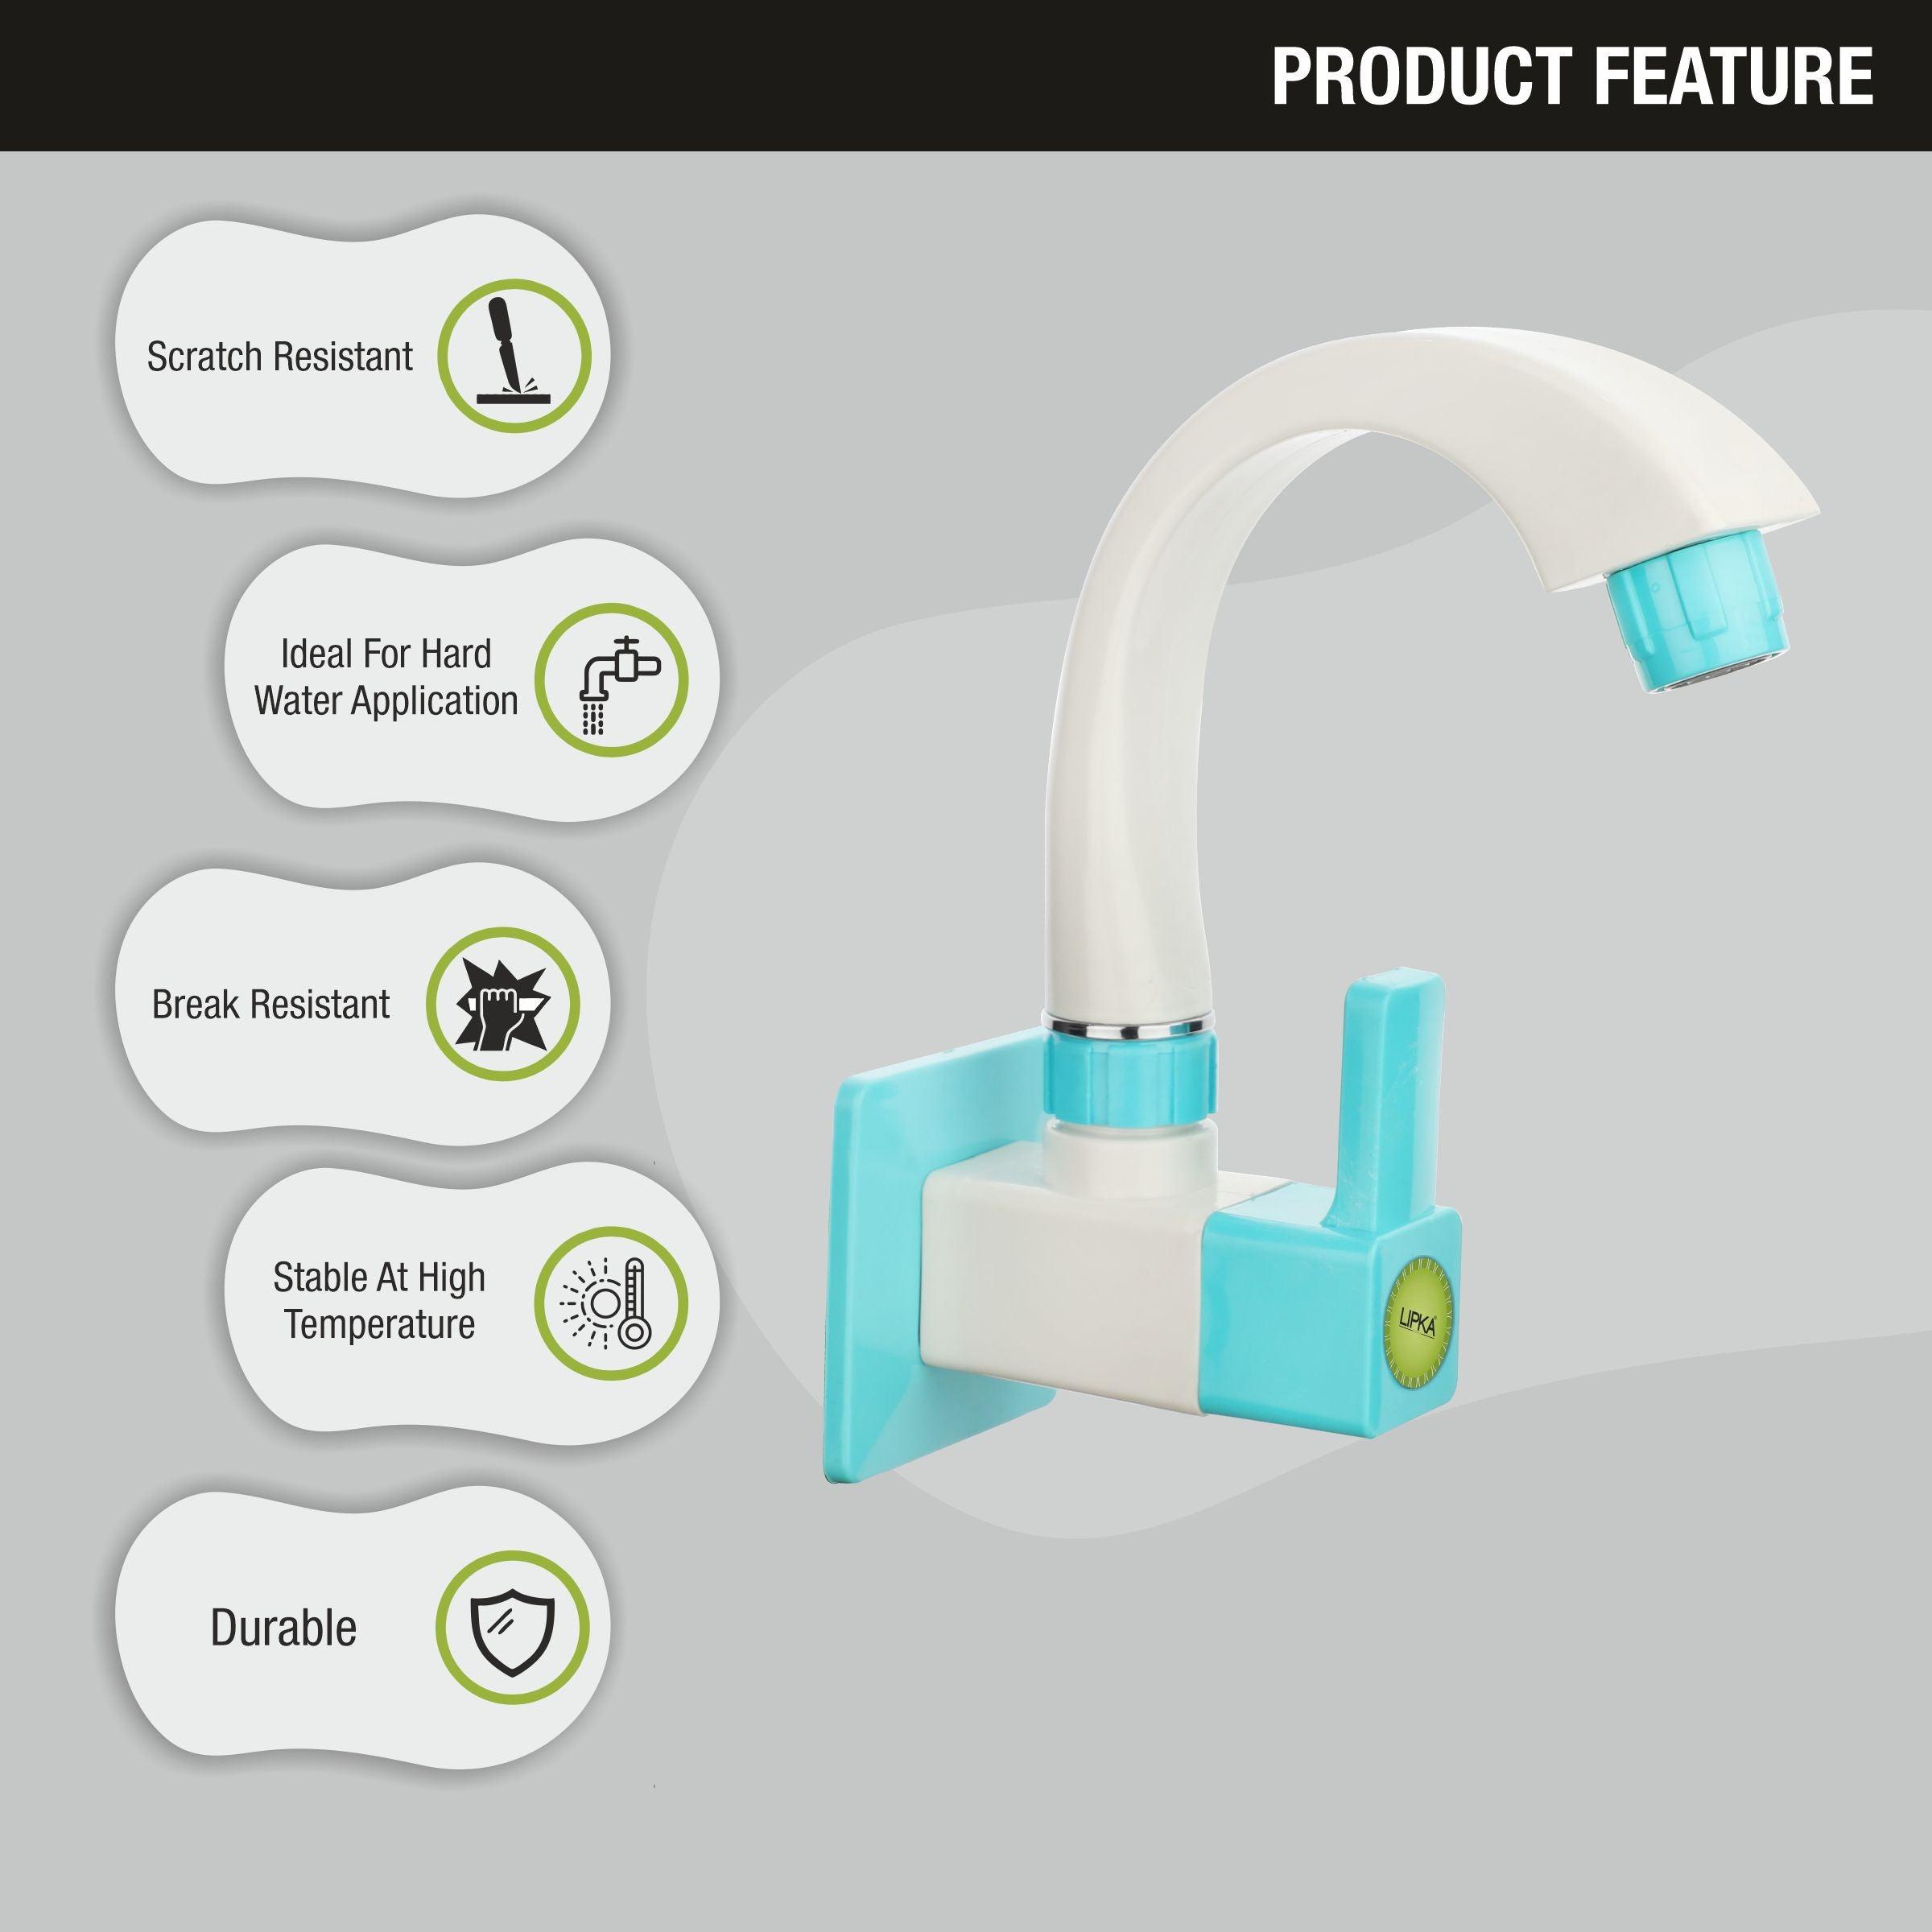 Aura Sink Tap with Swivel Spout PTMT Faucet features